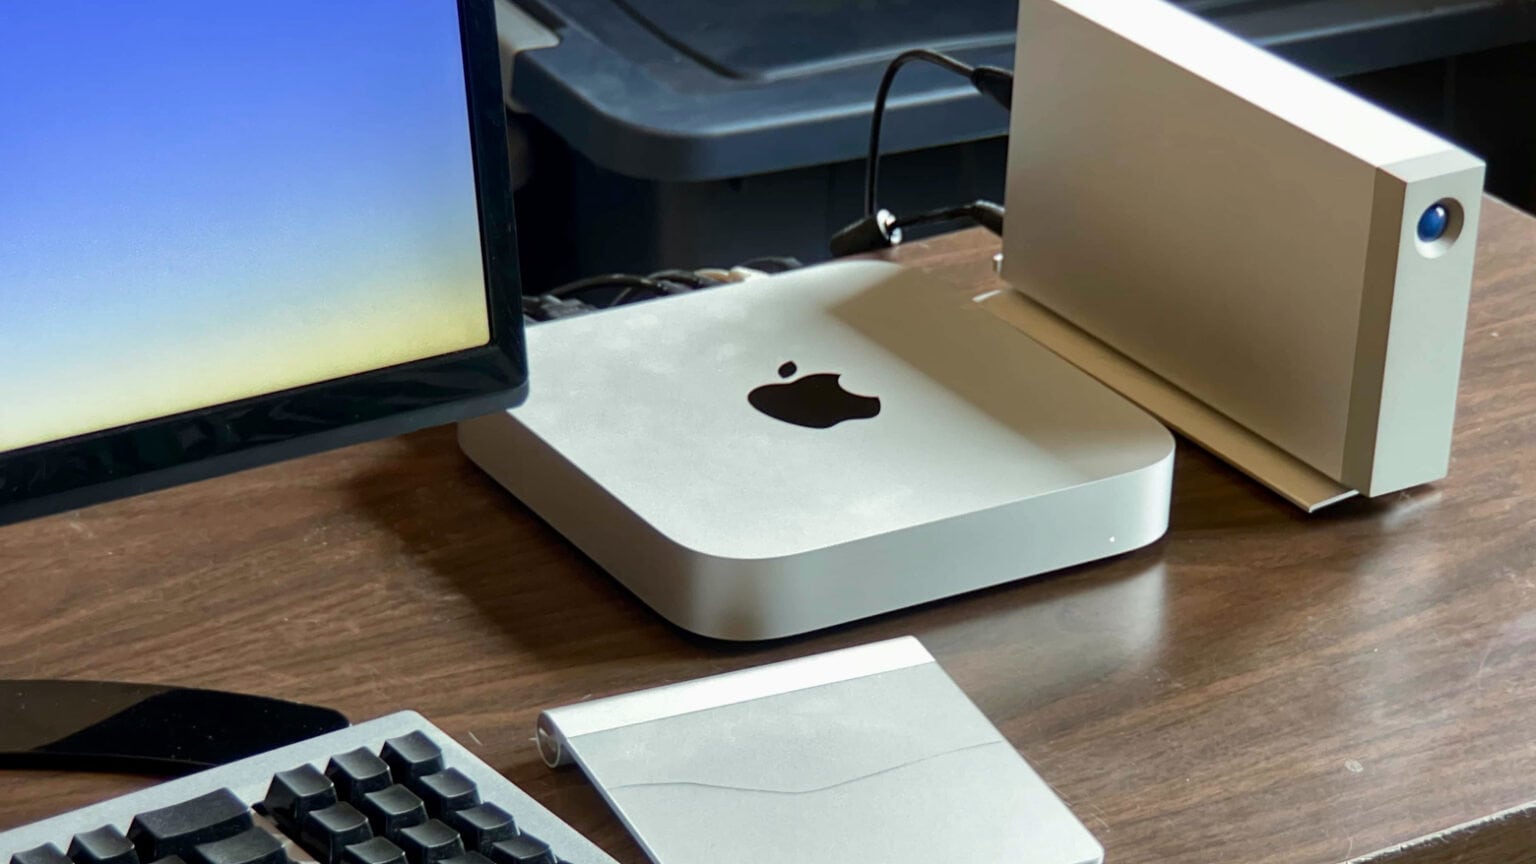 Mac mini might skip Apple M3 processor in favor of M4